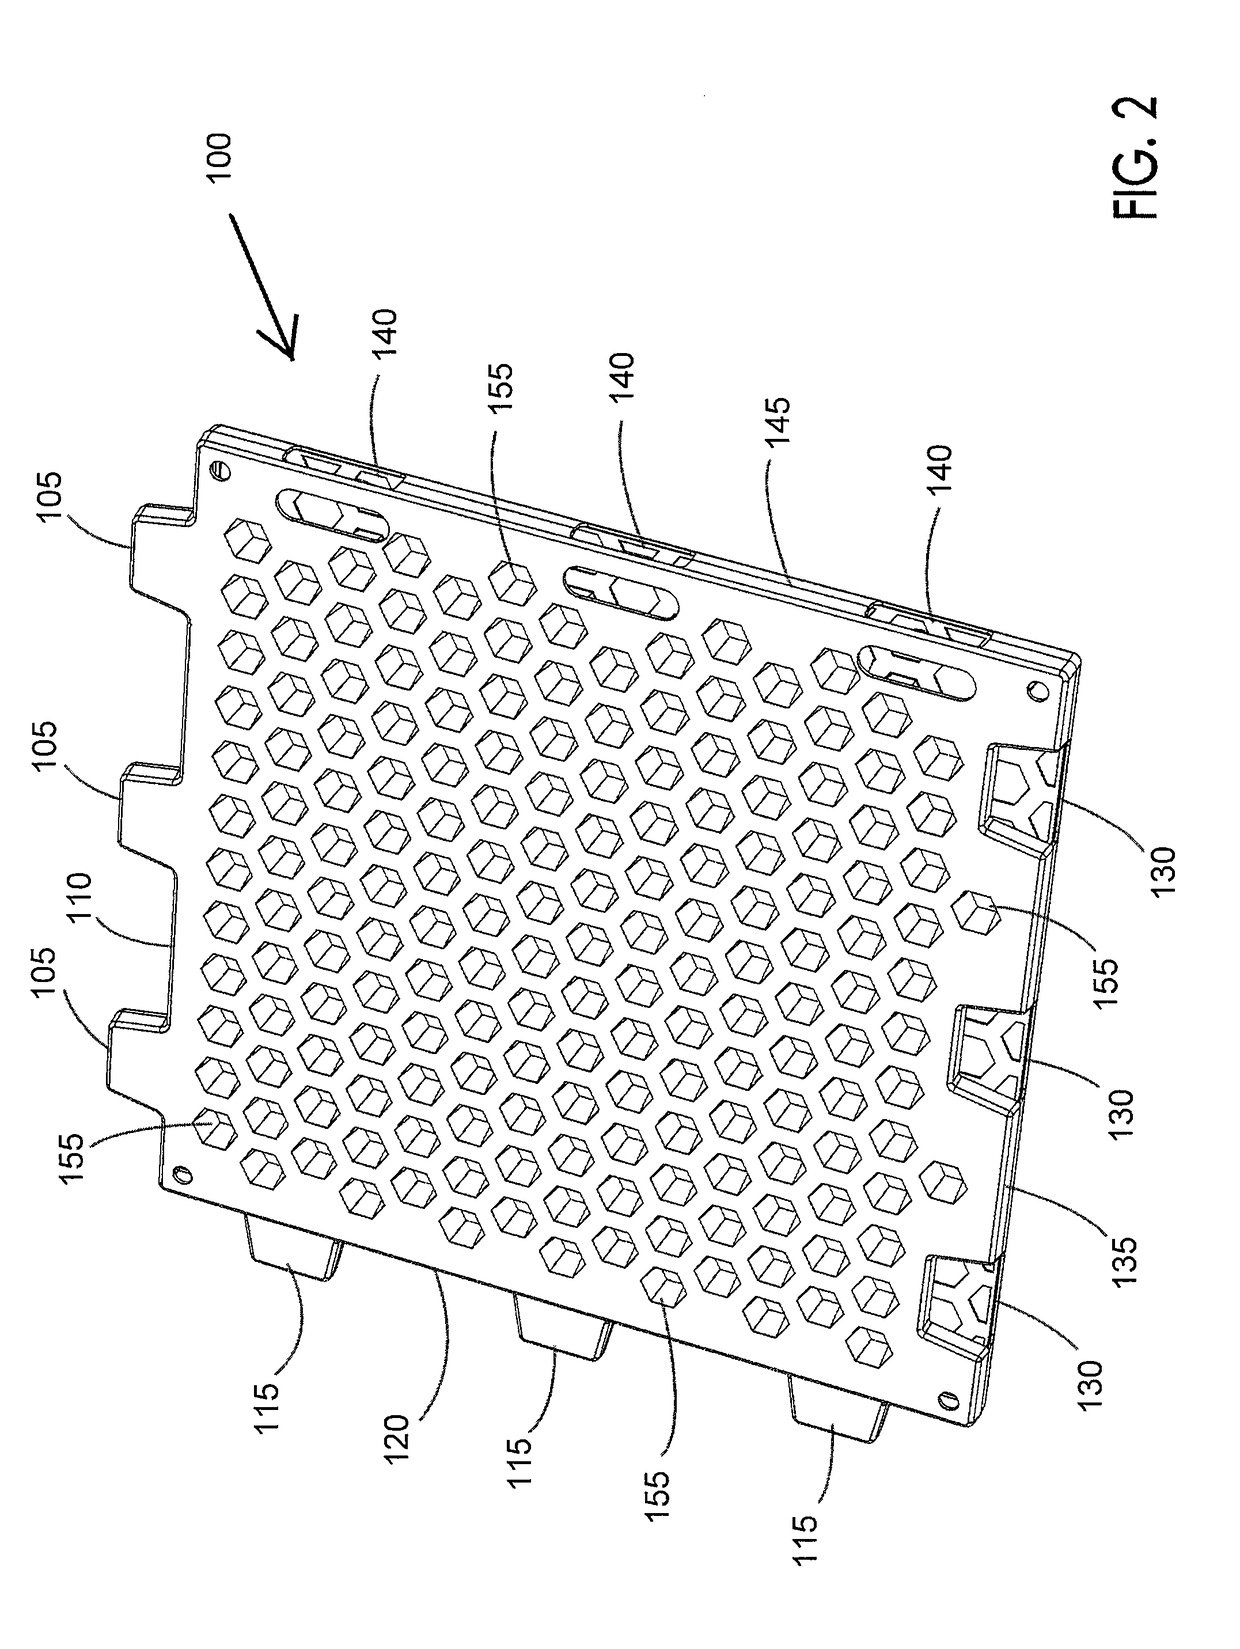 Lightweight panel mat with interlocking elements